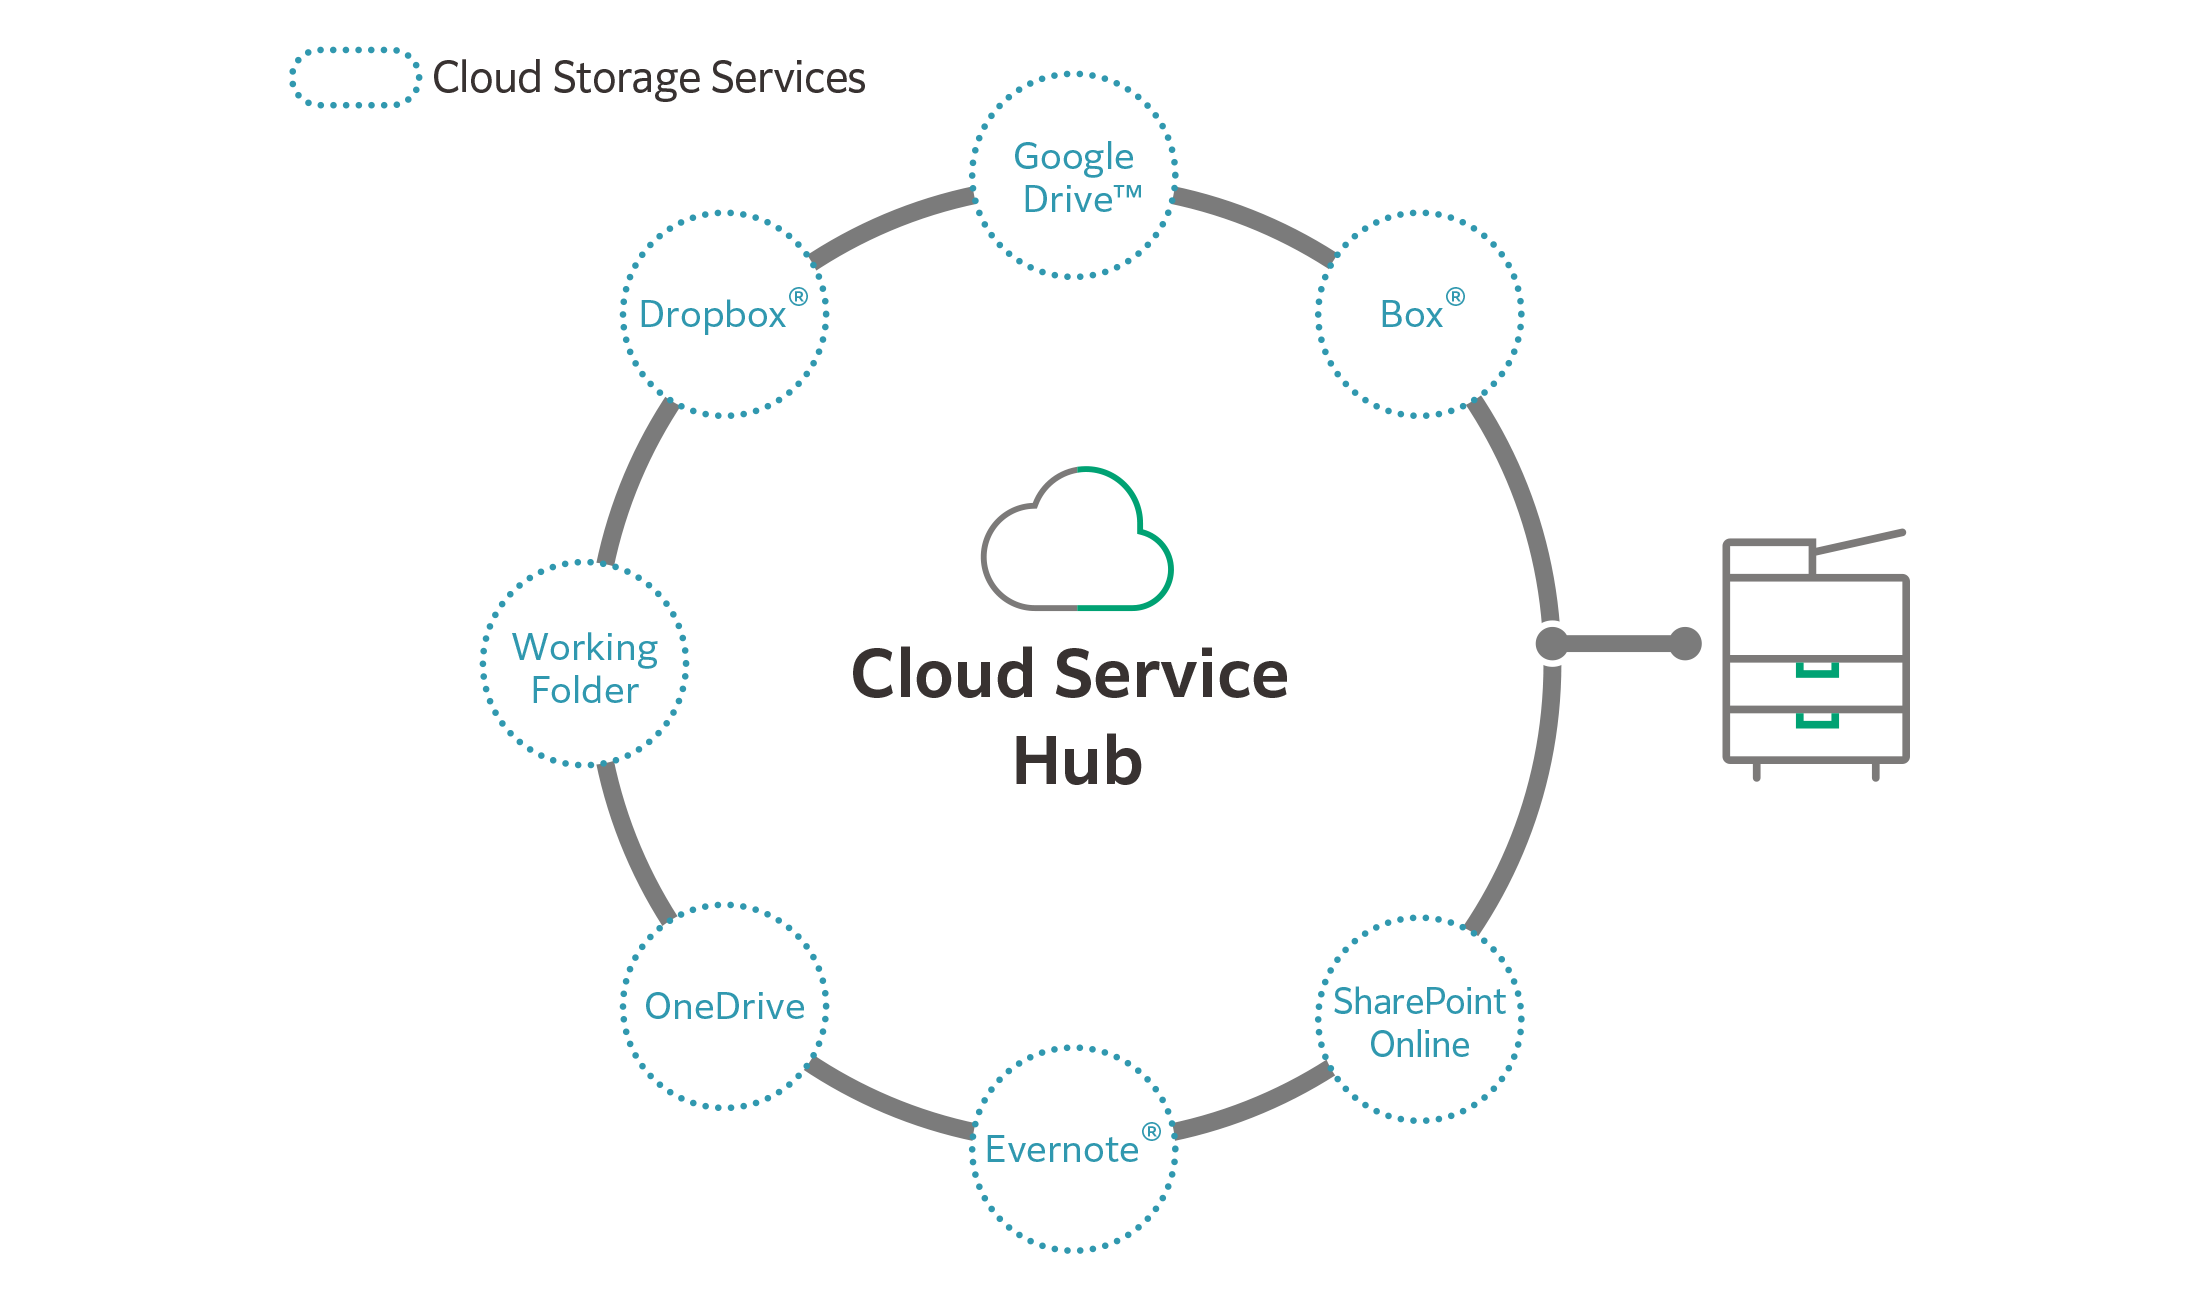 "Cloud Service Hub"